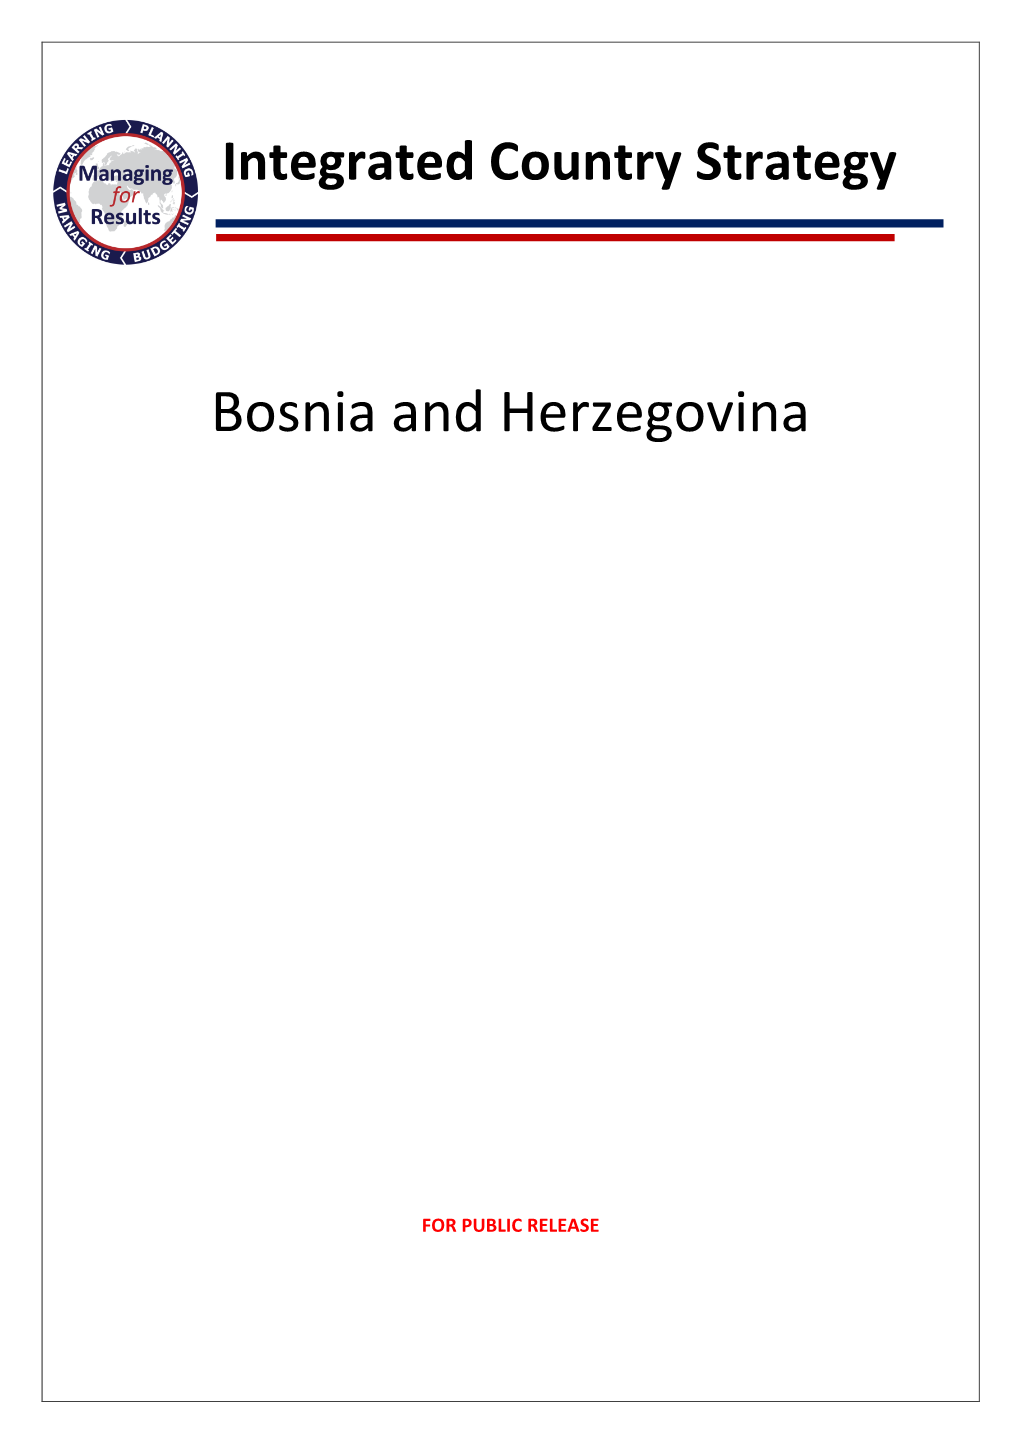 ICS Bosnia and Herzegovina UNCLASS